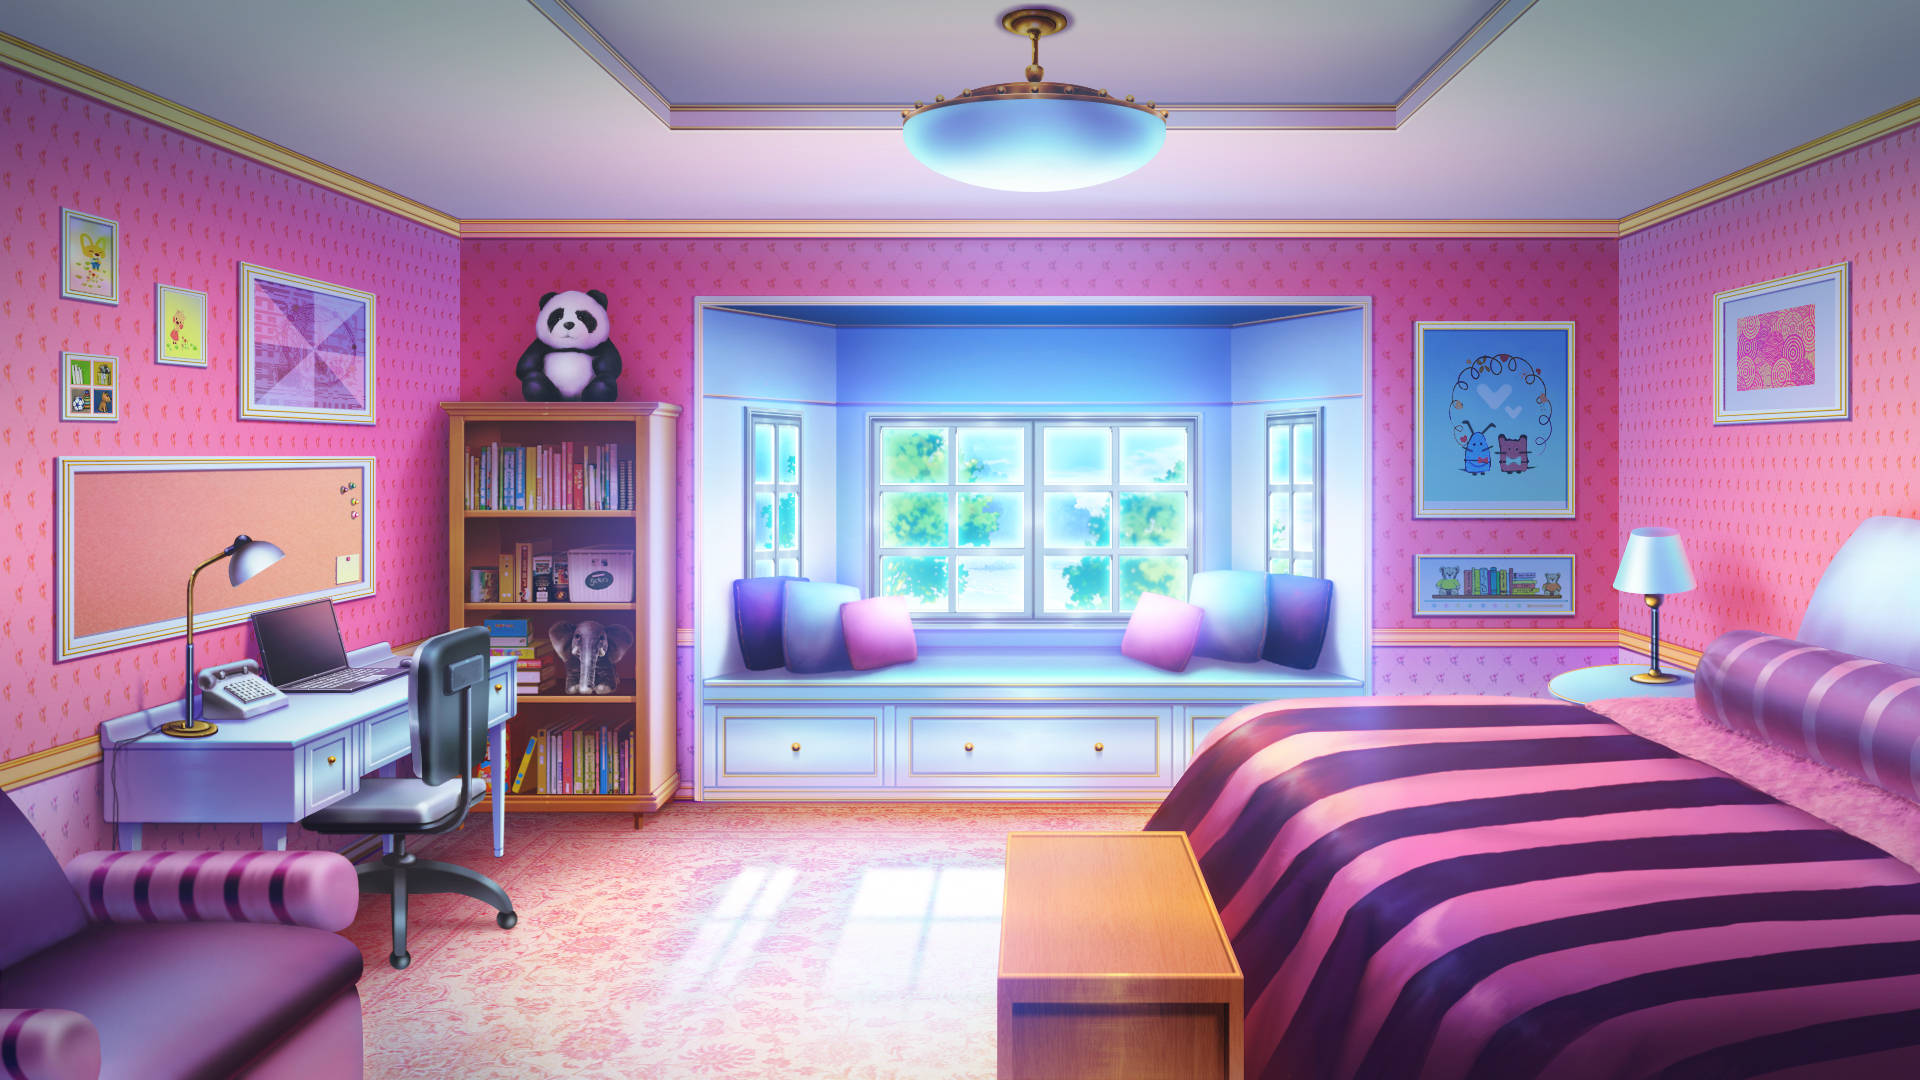 Free Anime Bedroom Wallpaper Downloads, Anime Bedroom Wallpaper for FREE